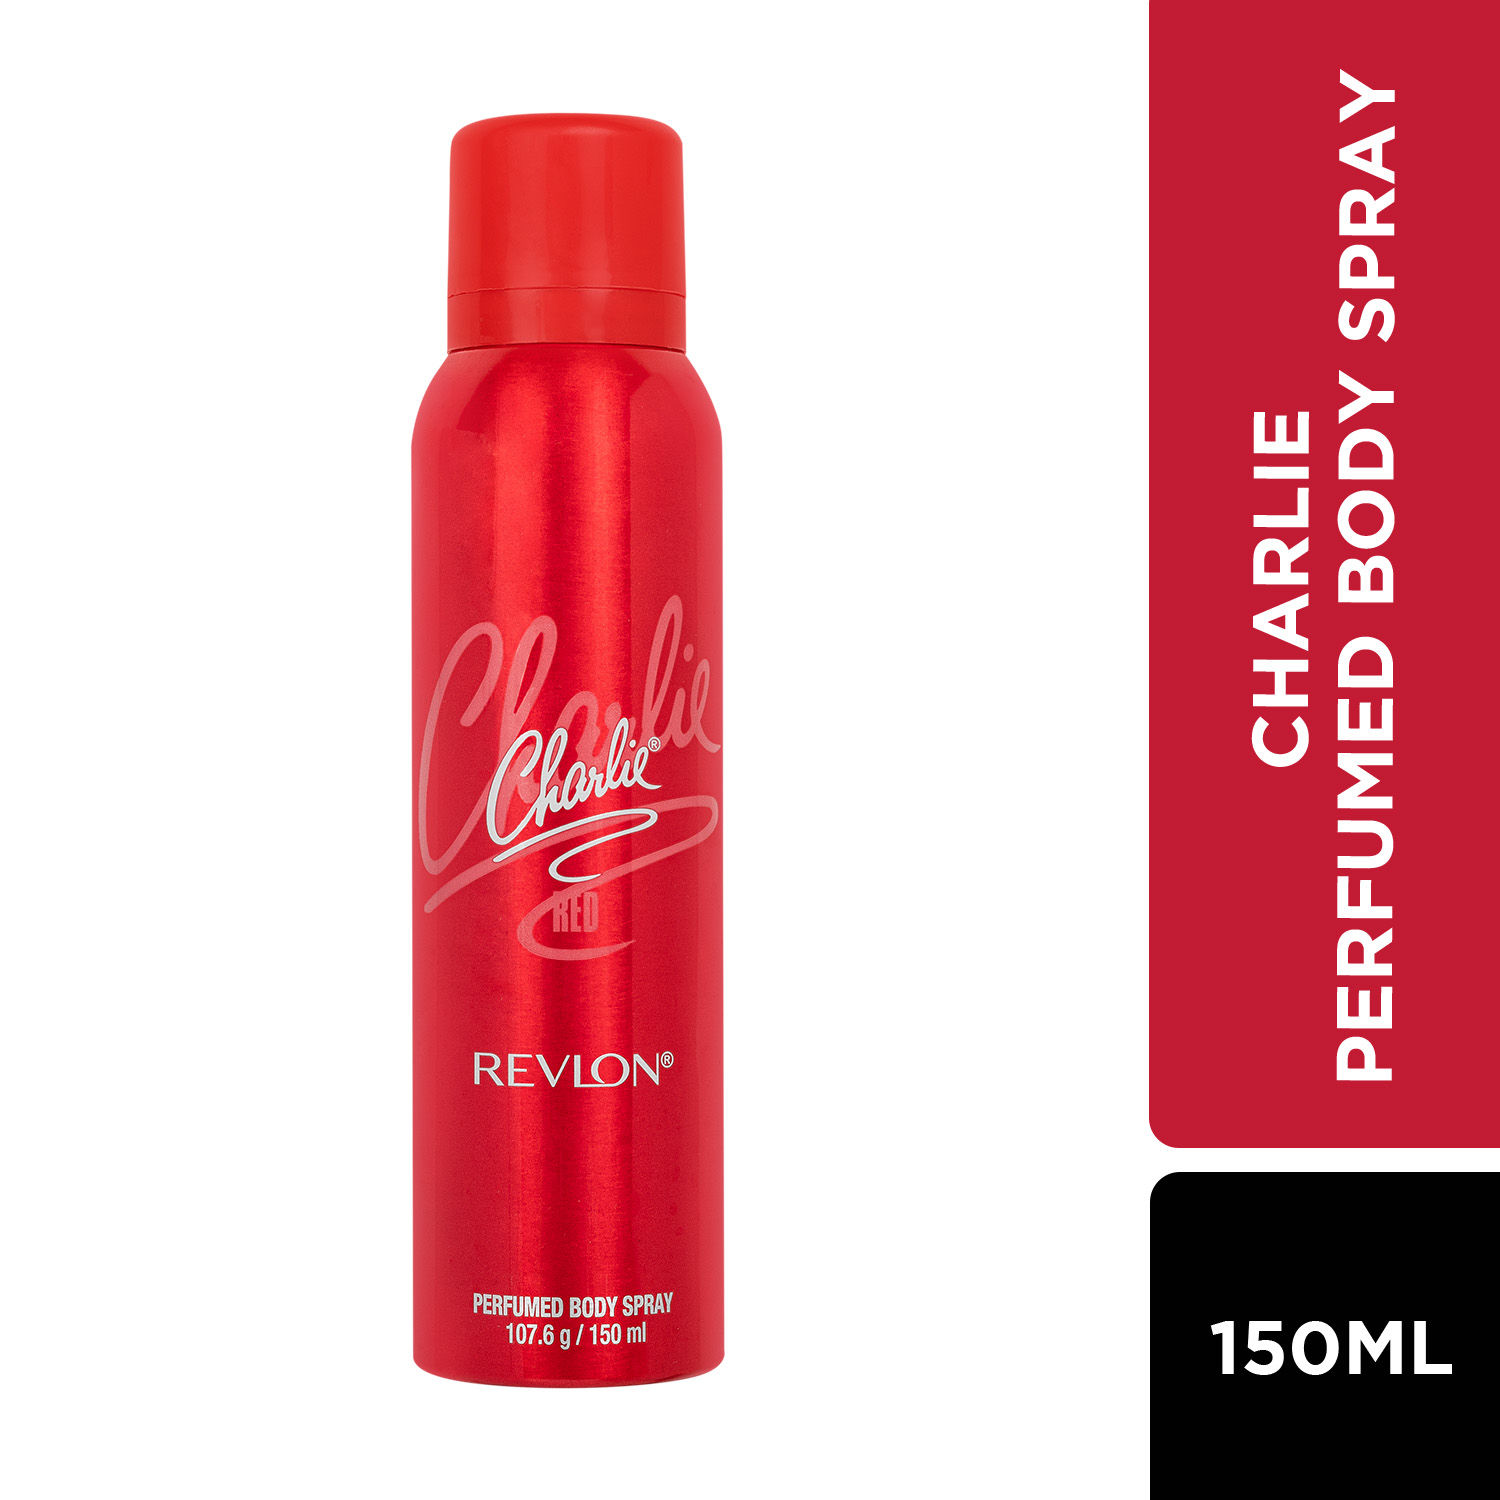 Revlon Charlie Red Perfumed Body Spray